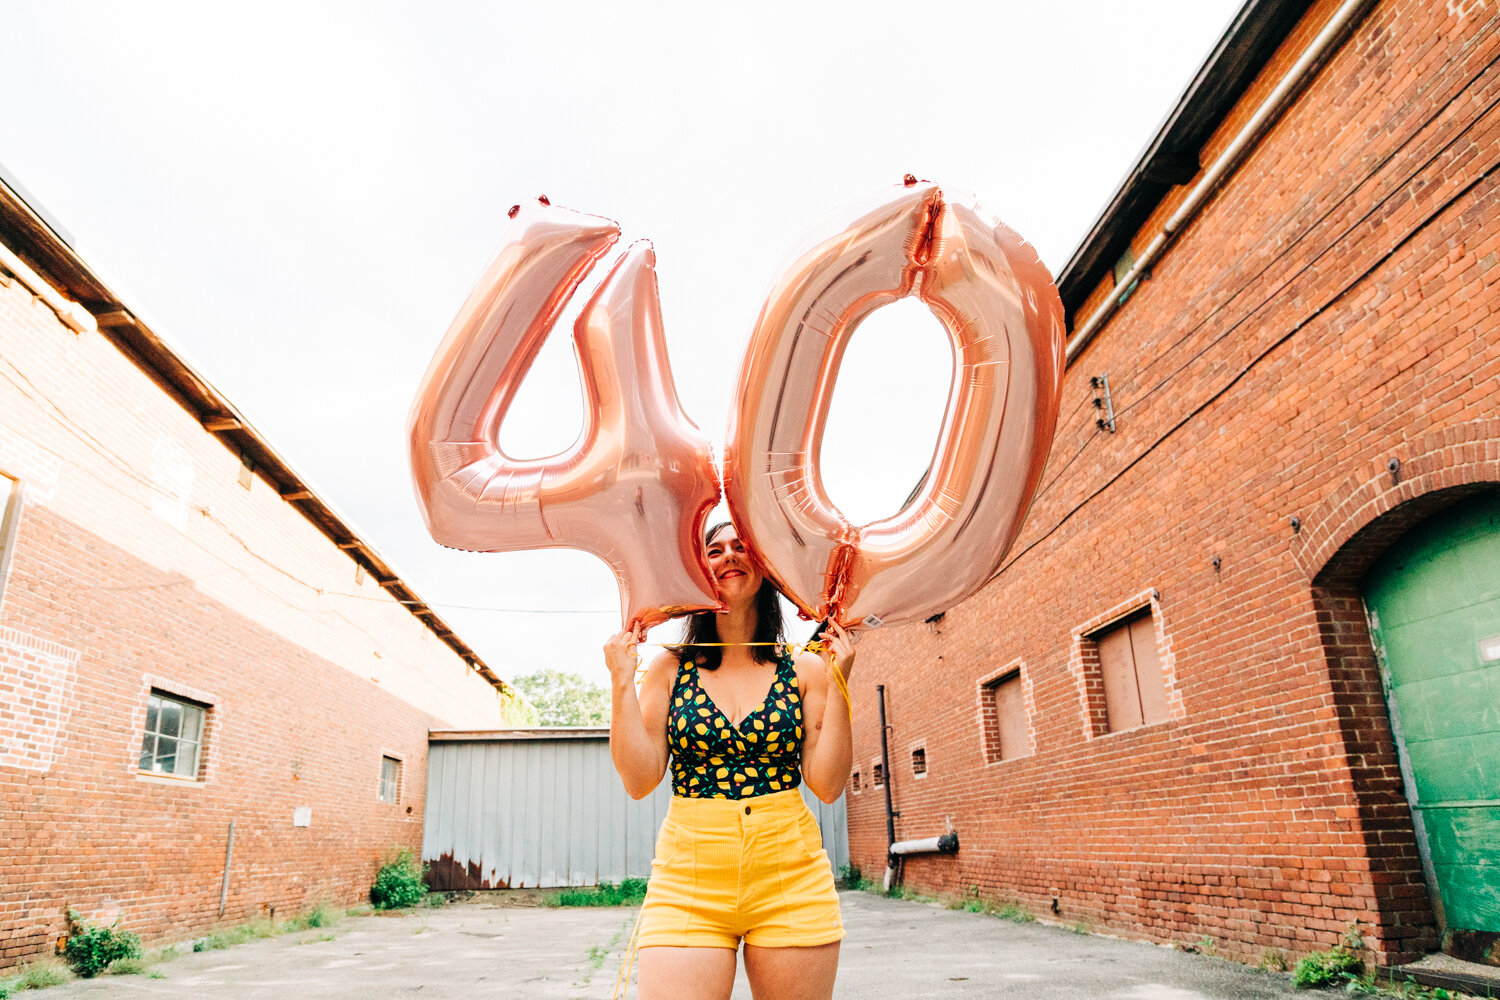 40th Birthday Photoshoot Ideas - Casual With 40 Balloon